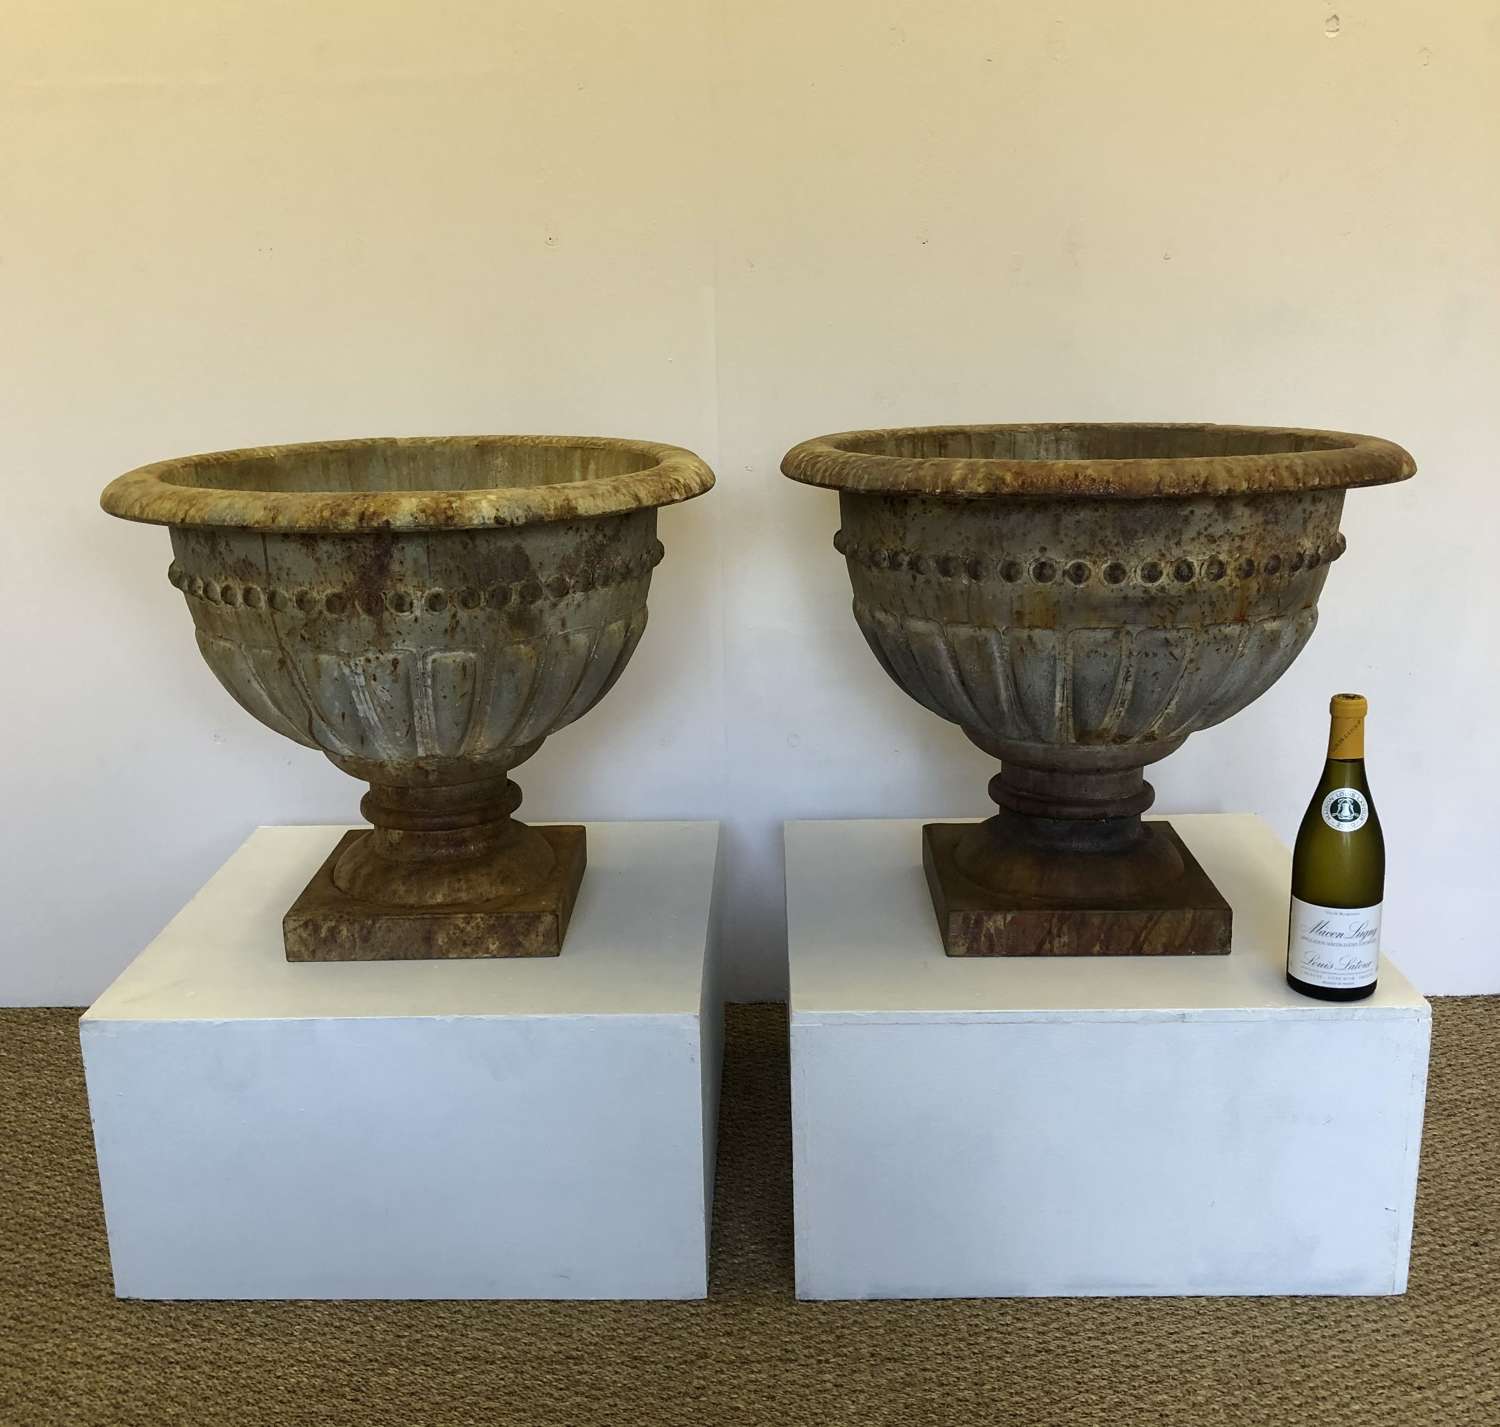 A large pair of Zinc orangery urns